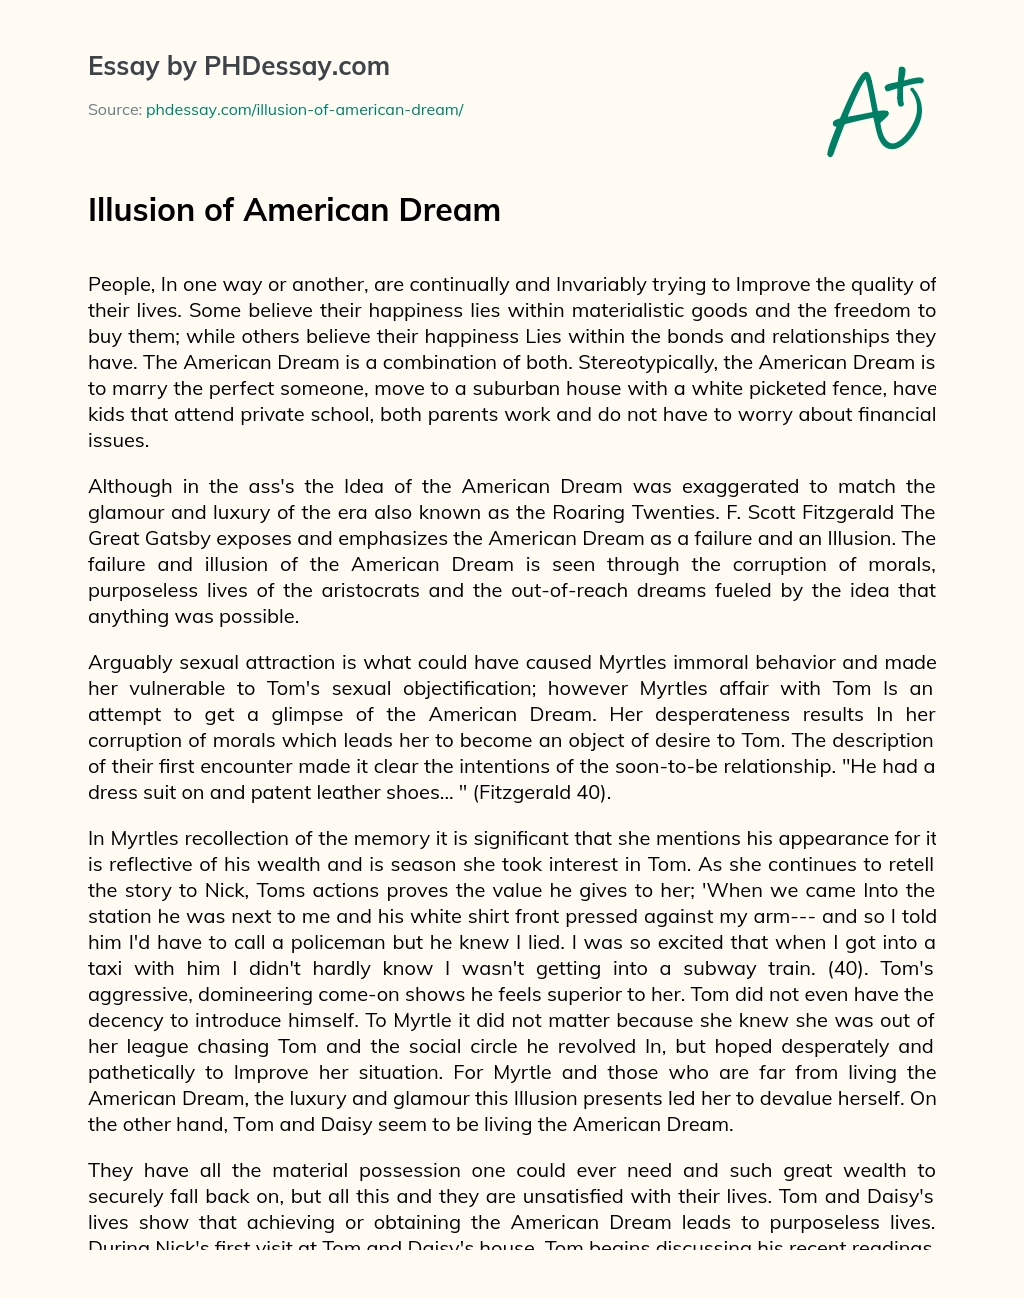 Illusion of American Dream essay